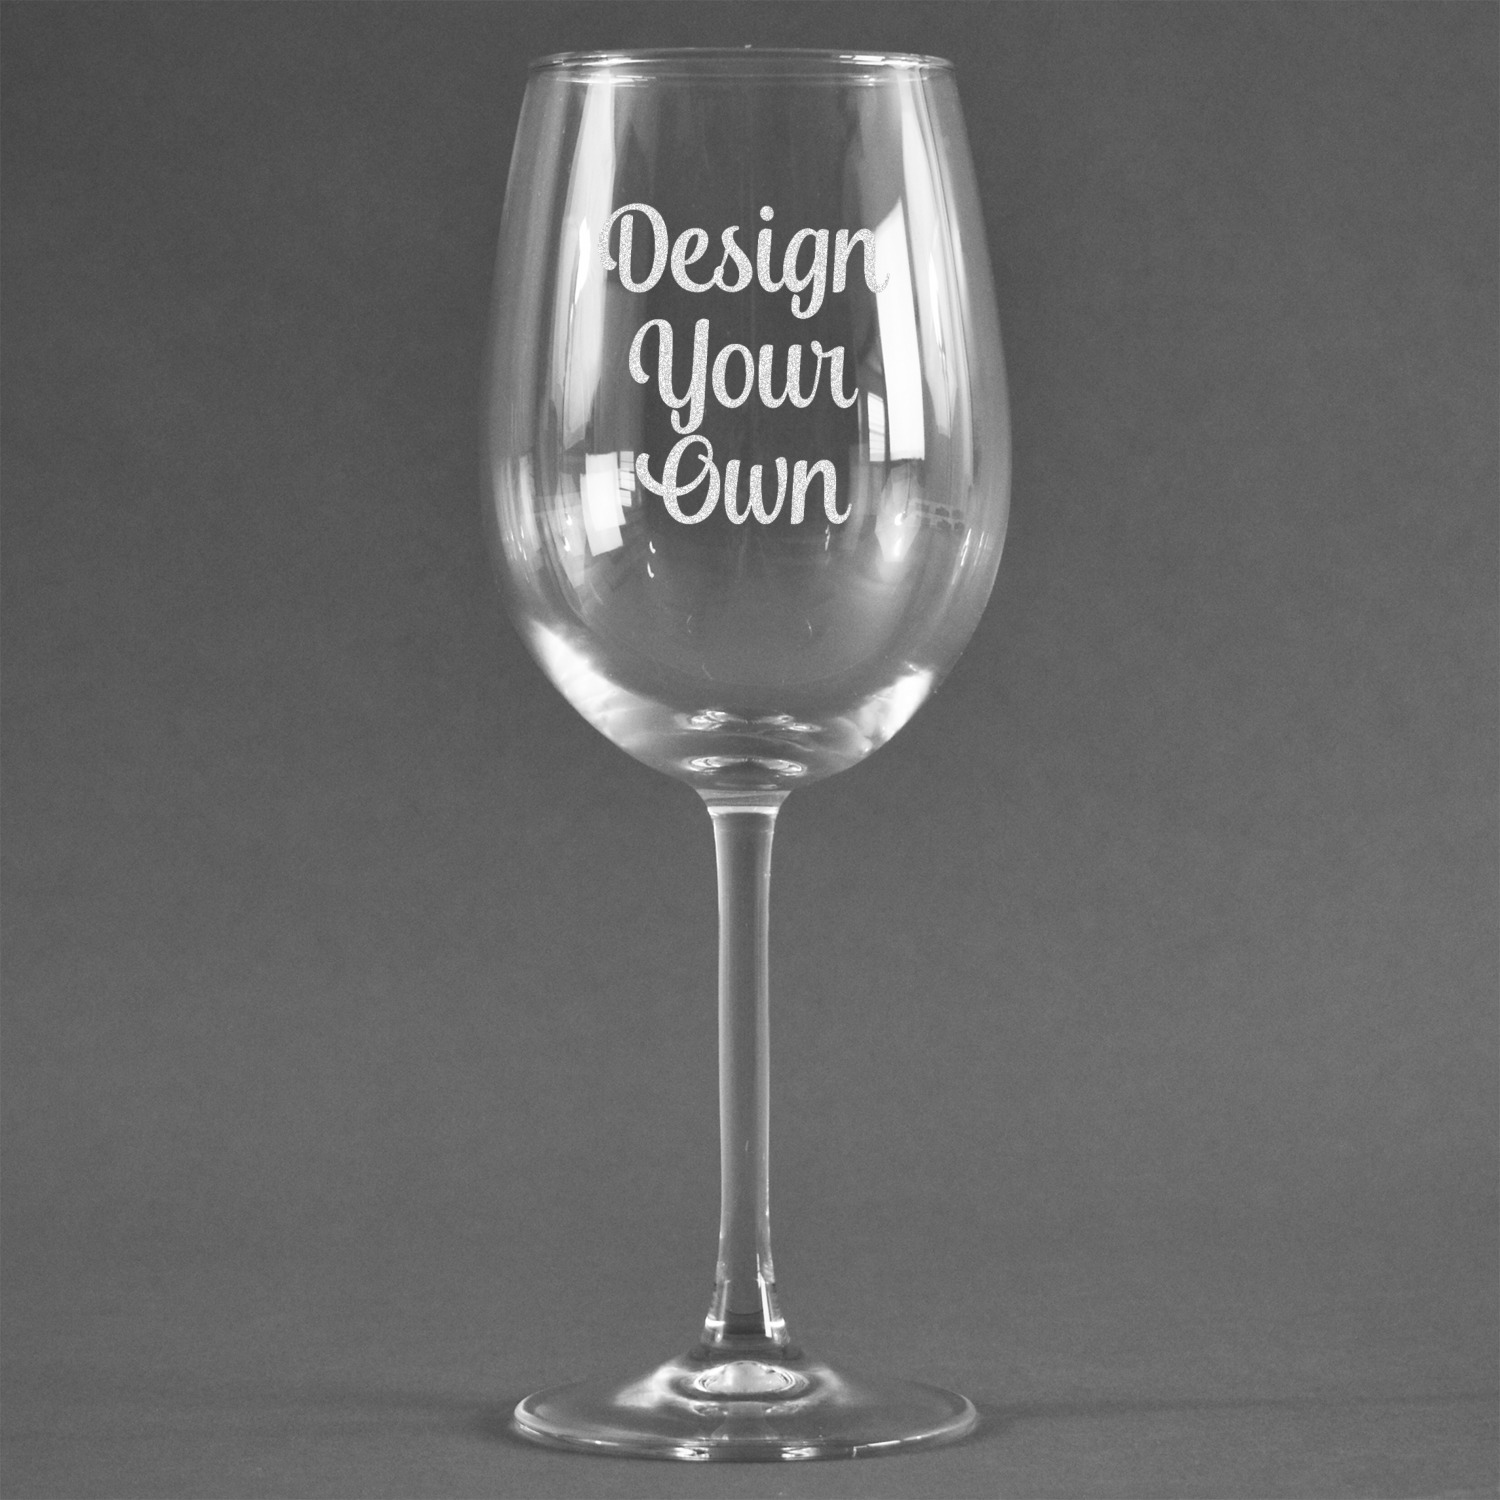 Trendy Script Name Personalized Wine Glasses